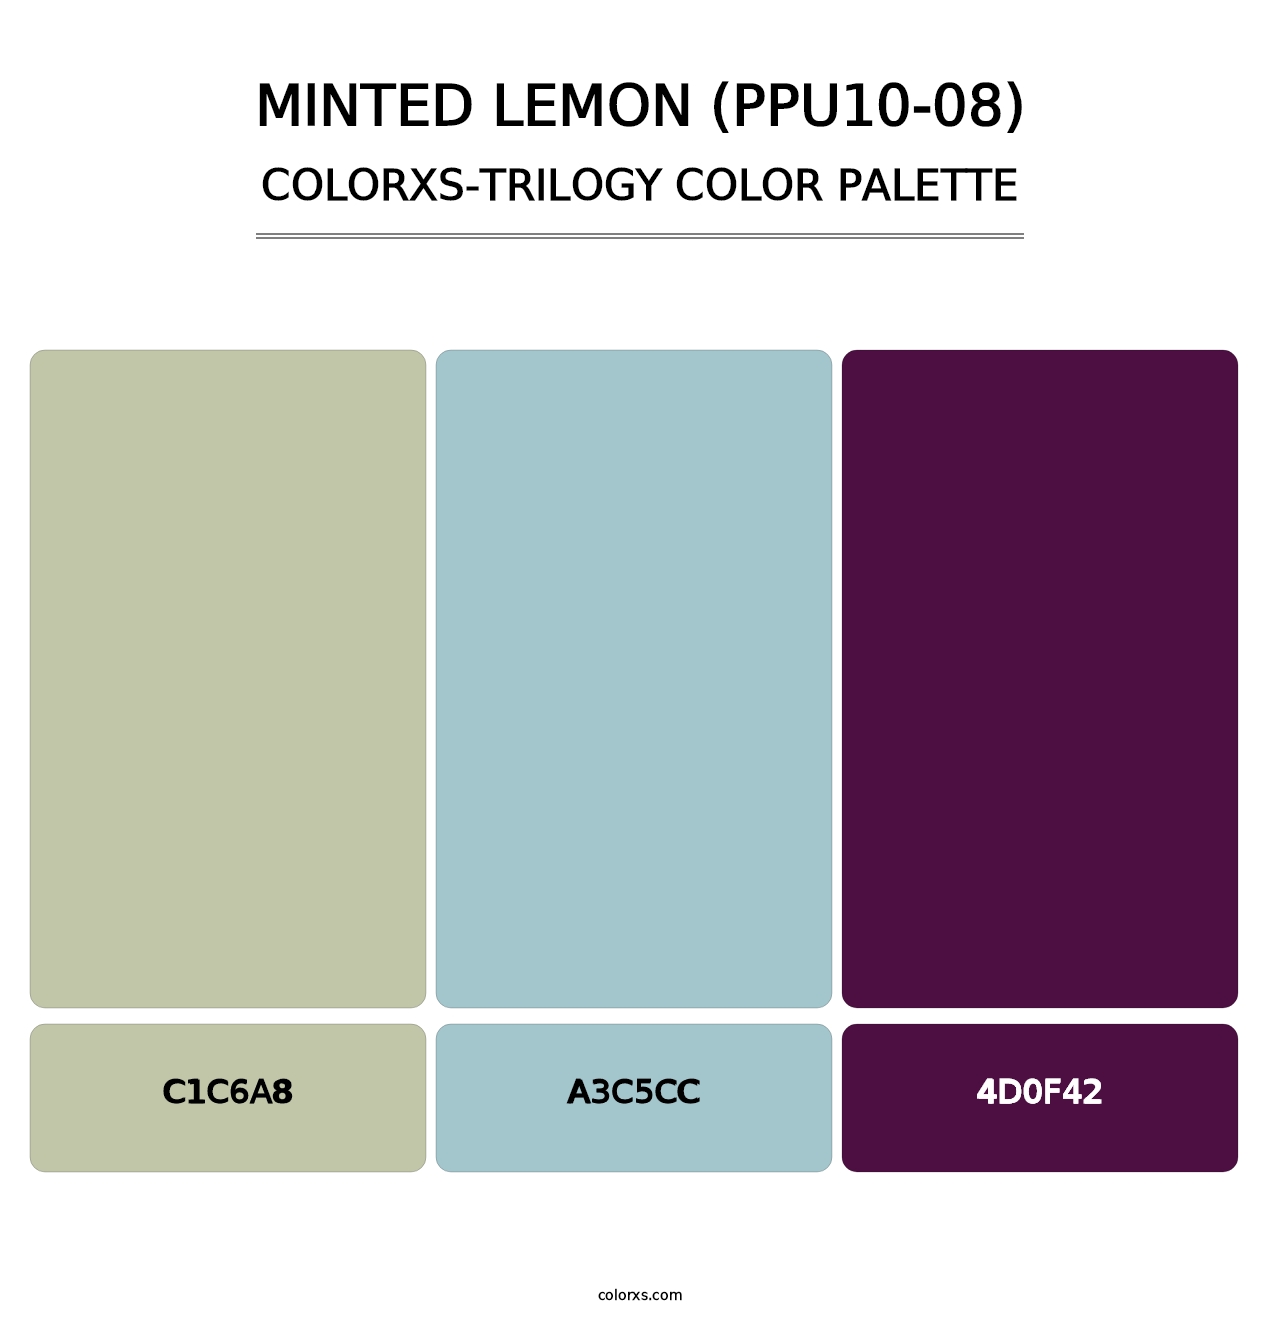 Minted Lemon (PPU10-08) - Colorxs Trilogy Palette